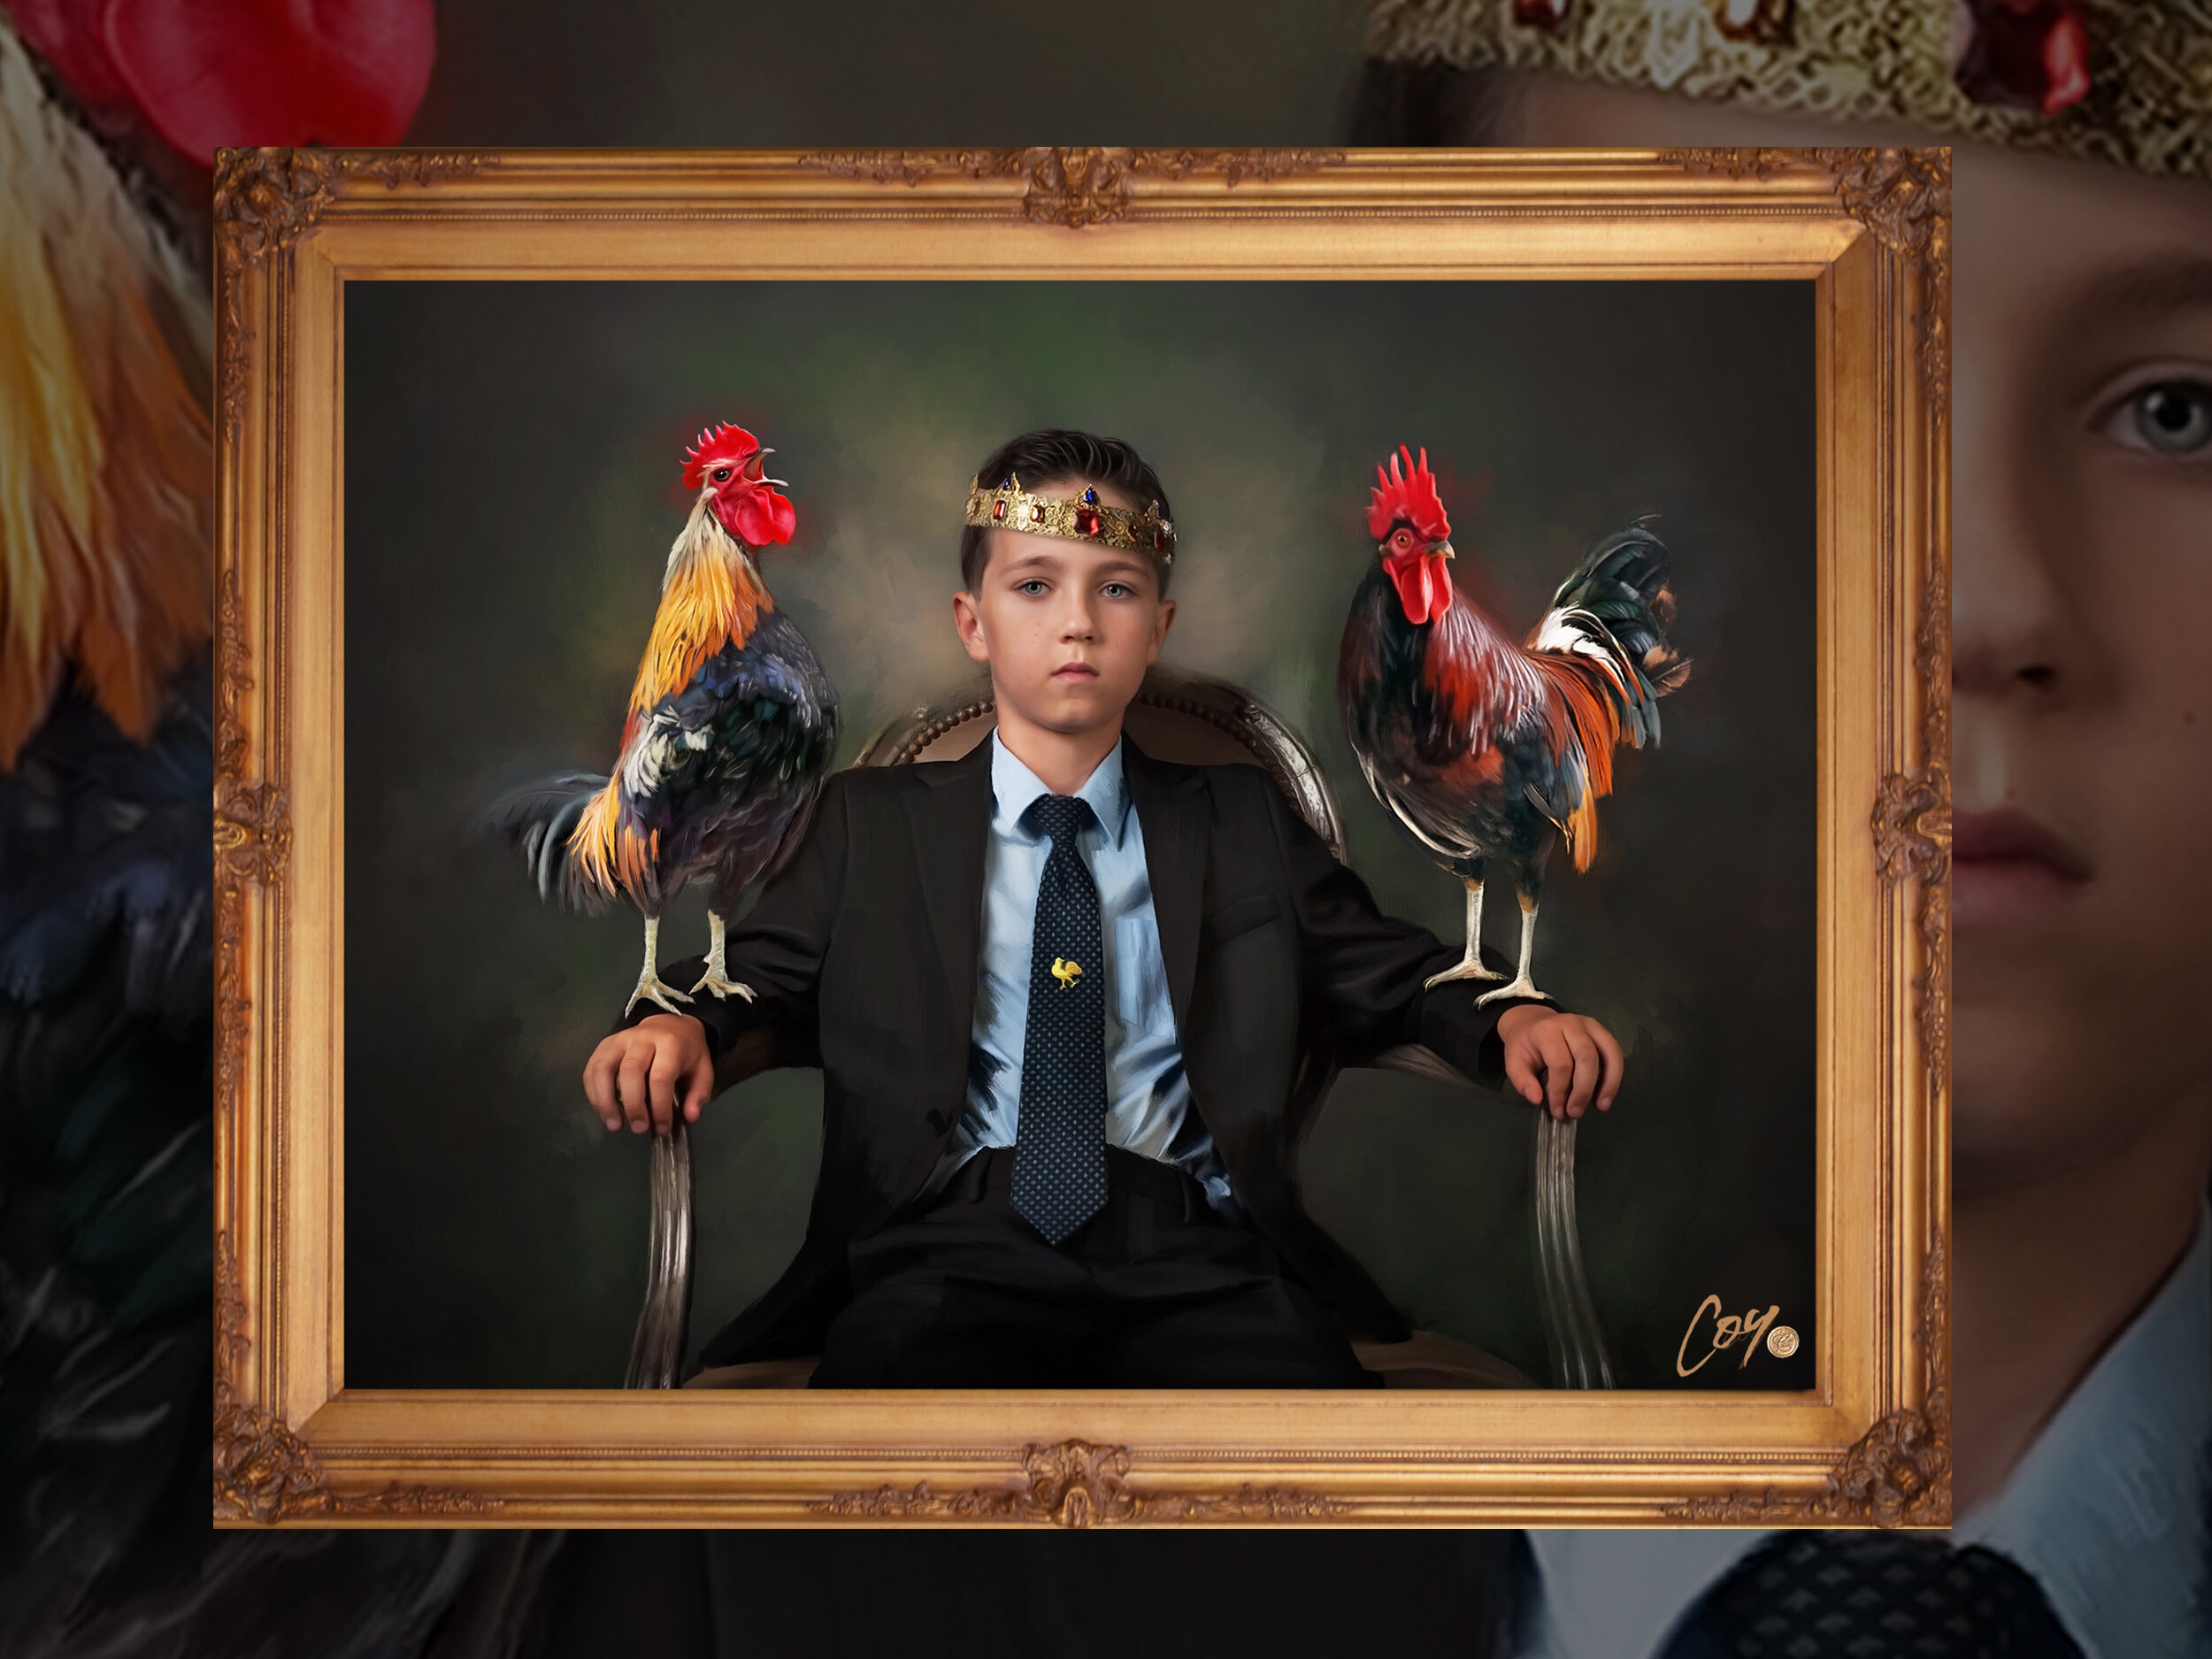 family-portrait-san diego-orange county-los angeles-photographer-rancho santa fe-painting-rooster-ckicken-boy-king.jpg